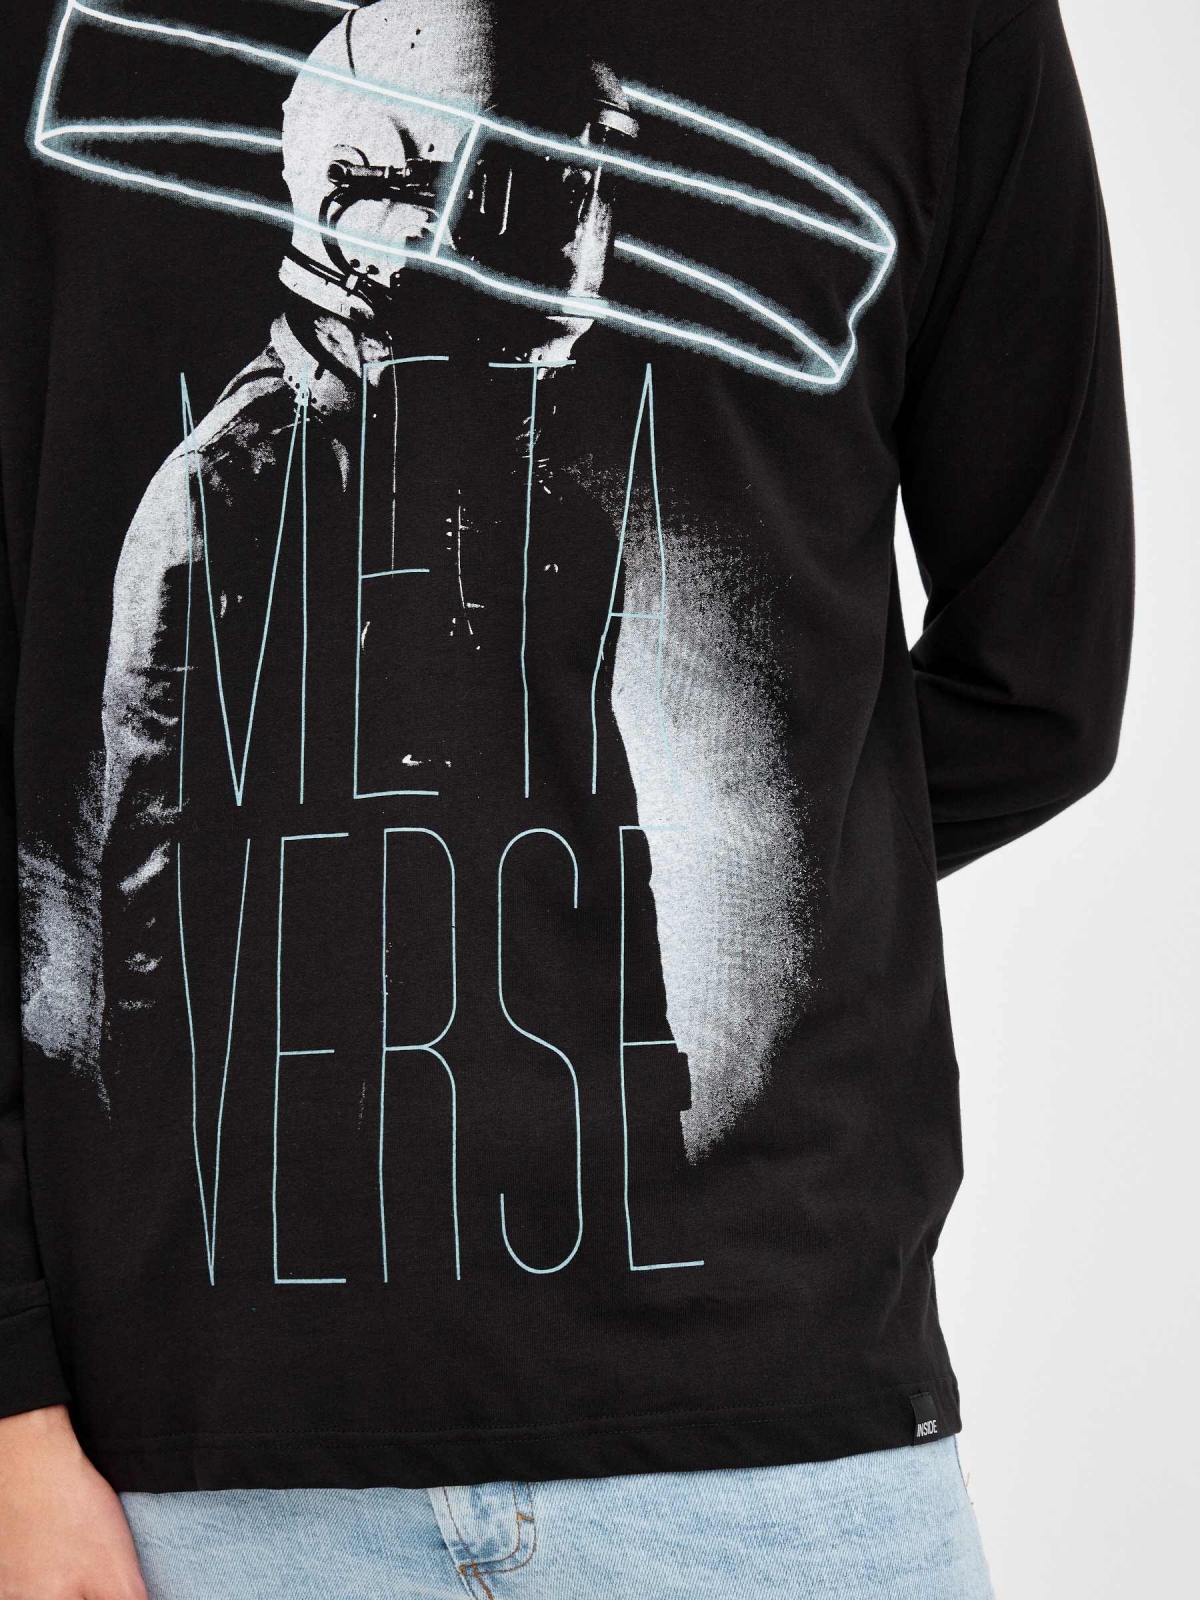 Metaverse Astronaut T-shirt black detail view